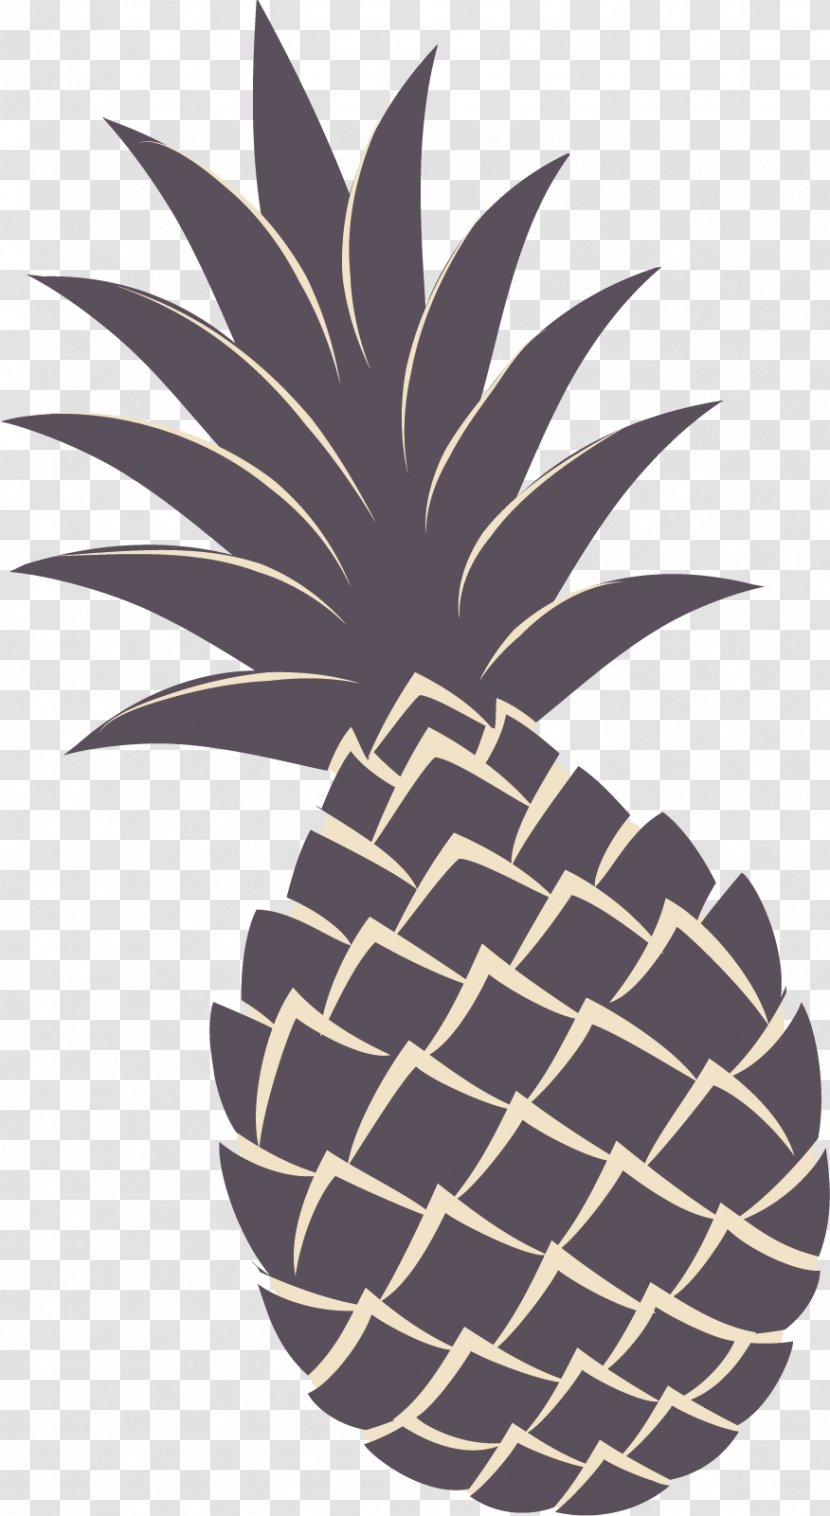 Pineapple Bun Vector Graphics Clip Art Illustration - Abacaxi Silhouette Transparent PNG